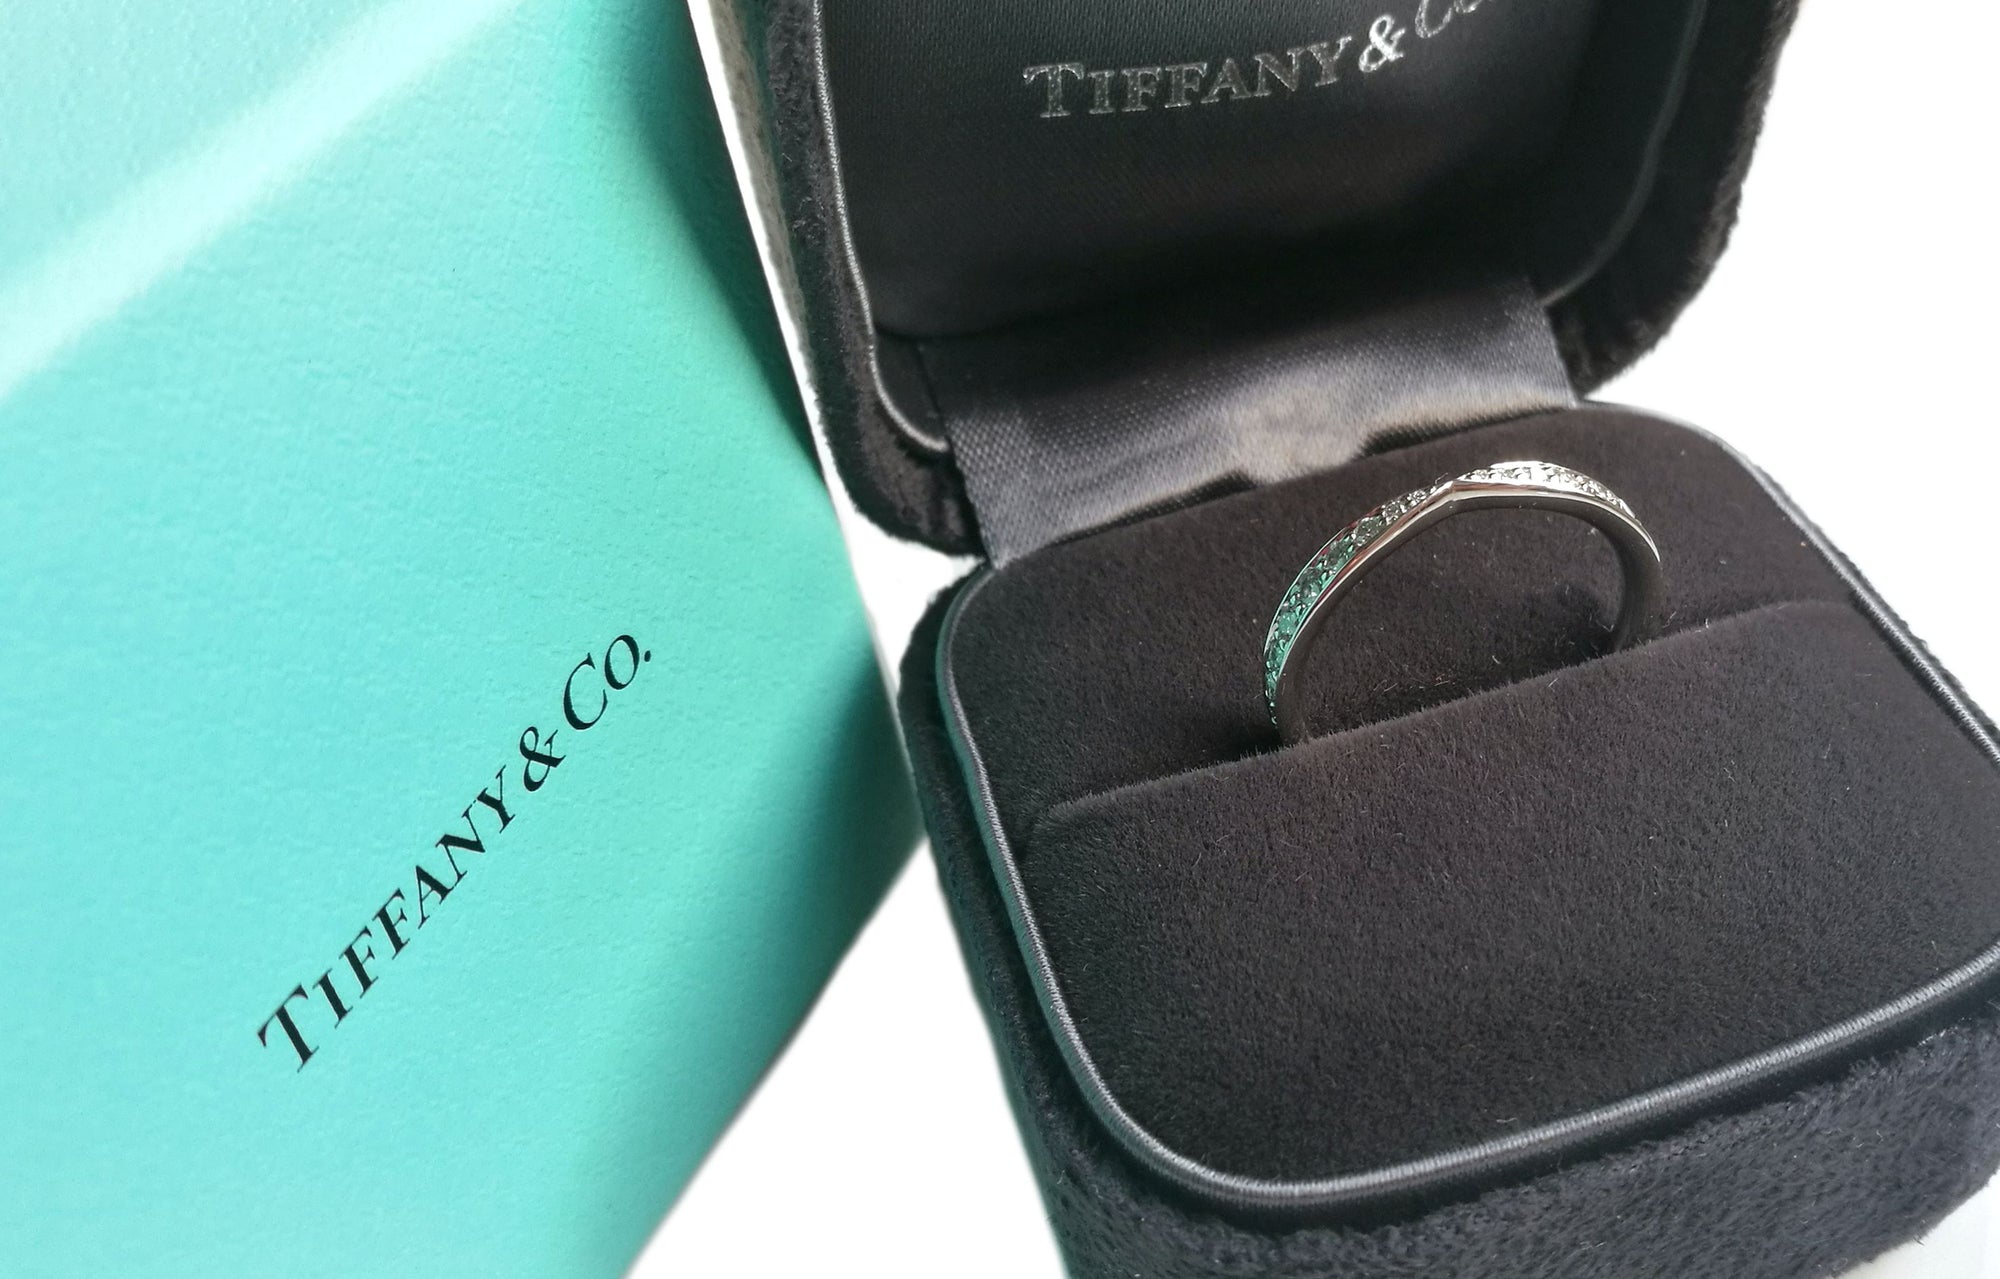 Tiffany & Co. Harmony 0.23ct Diamond & Platinum Wedding Ring